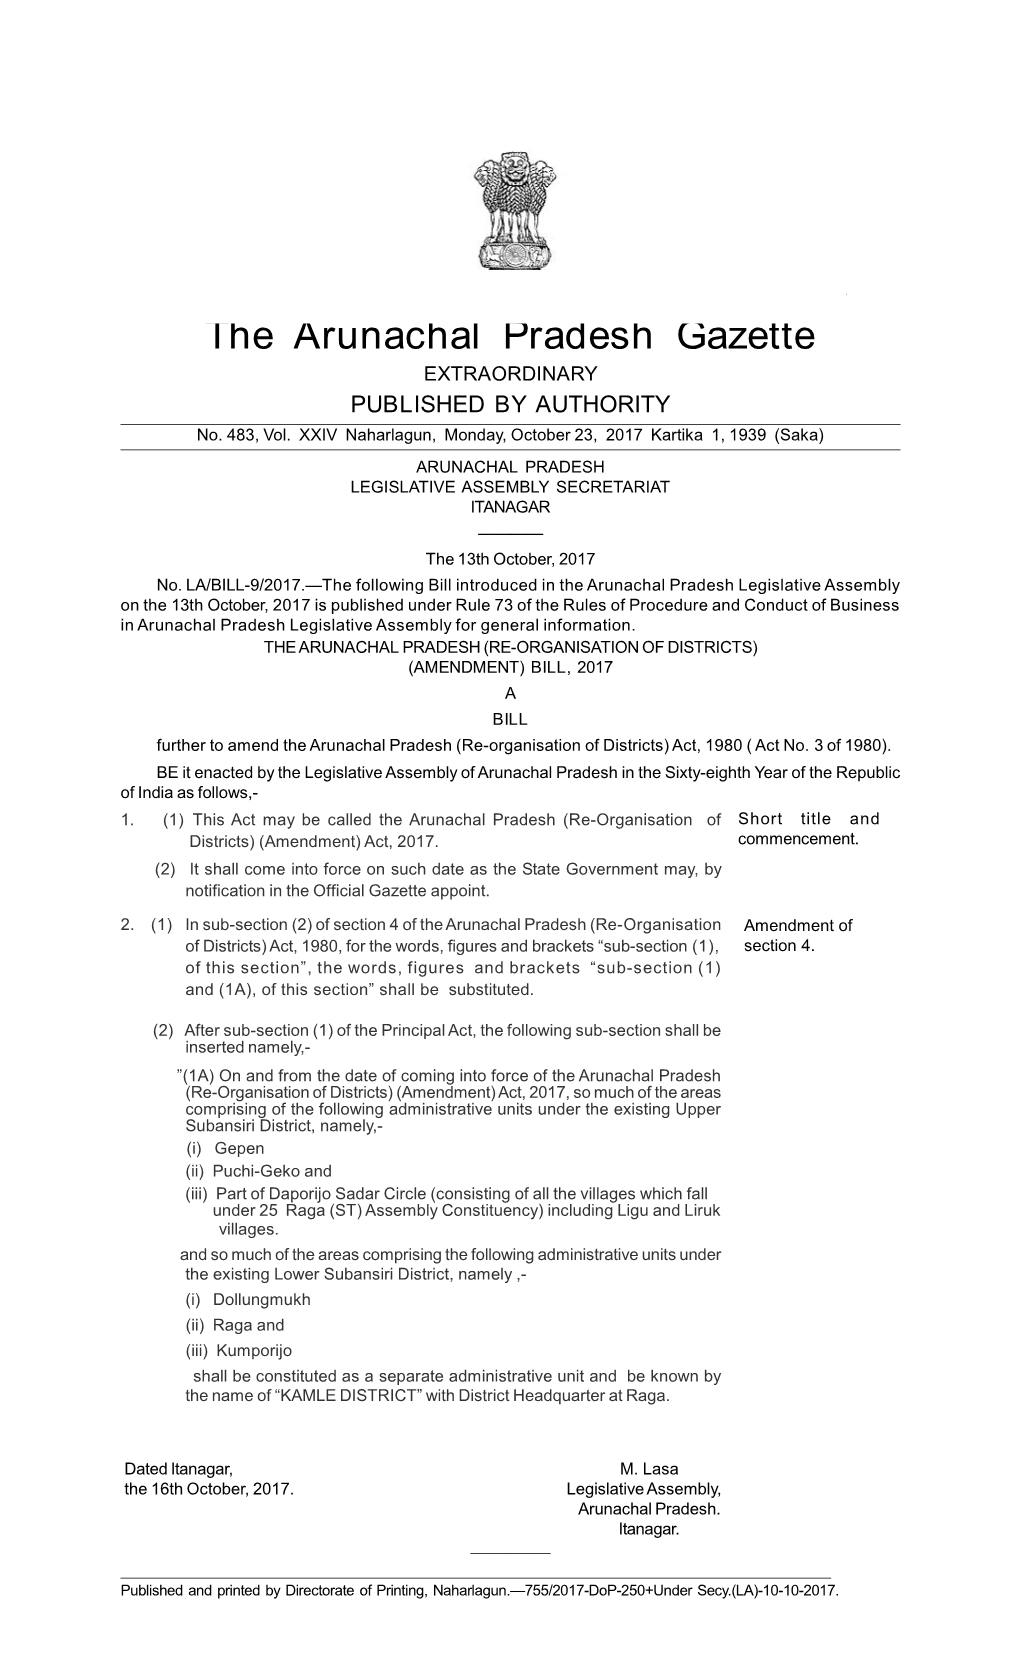 The Arunachal Pradesh Gazette EXTRAORDINARY PUBLISHED by AUTHORITY No